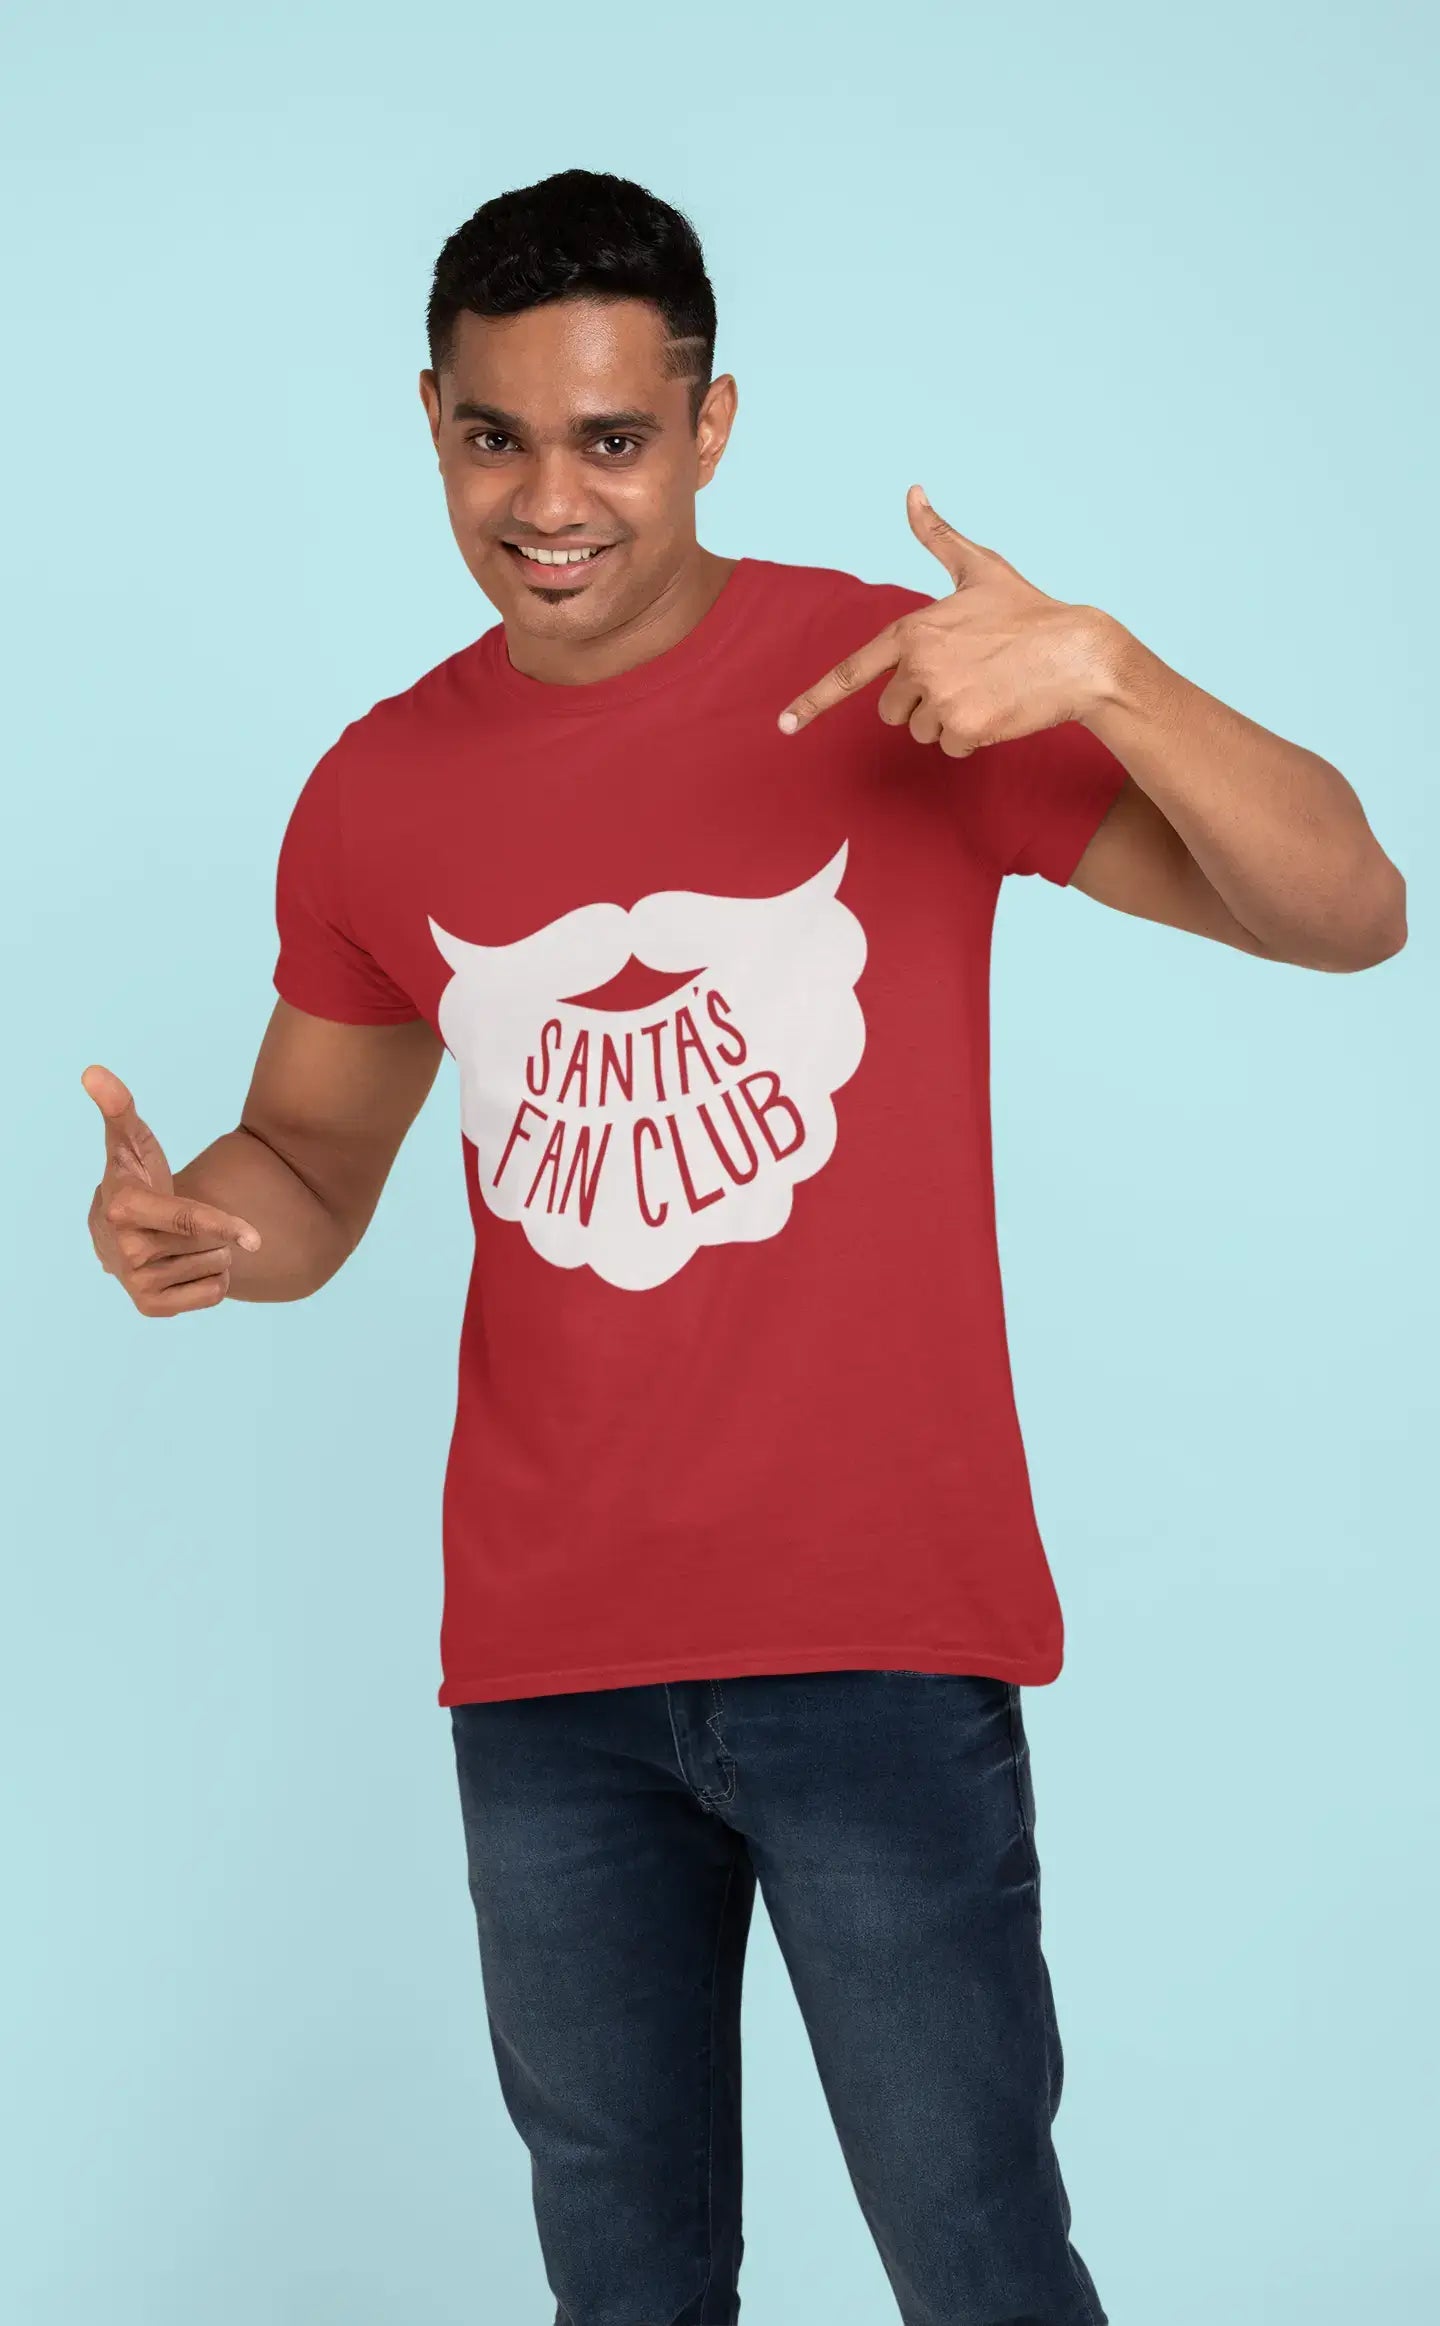 ULTRABASIC - Graphic Men's Santa's Fan Club Christmas T-Shirt Xmas Gift Ideas Red